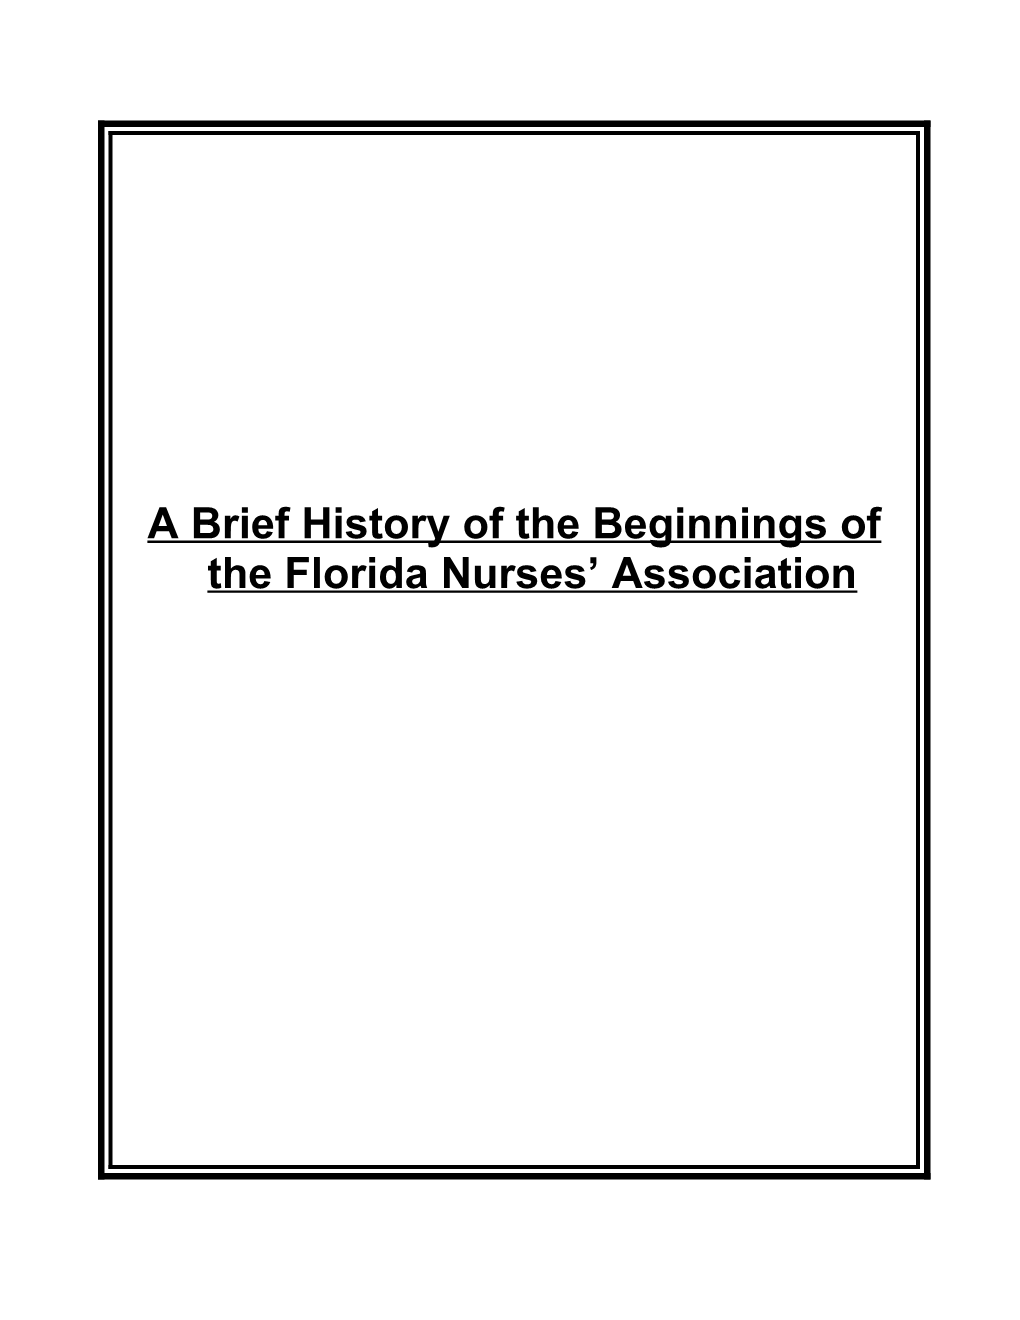 History of Florida Nurses Association